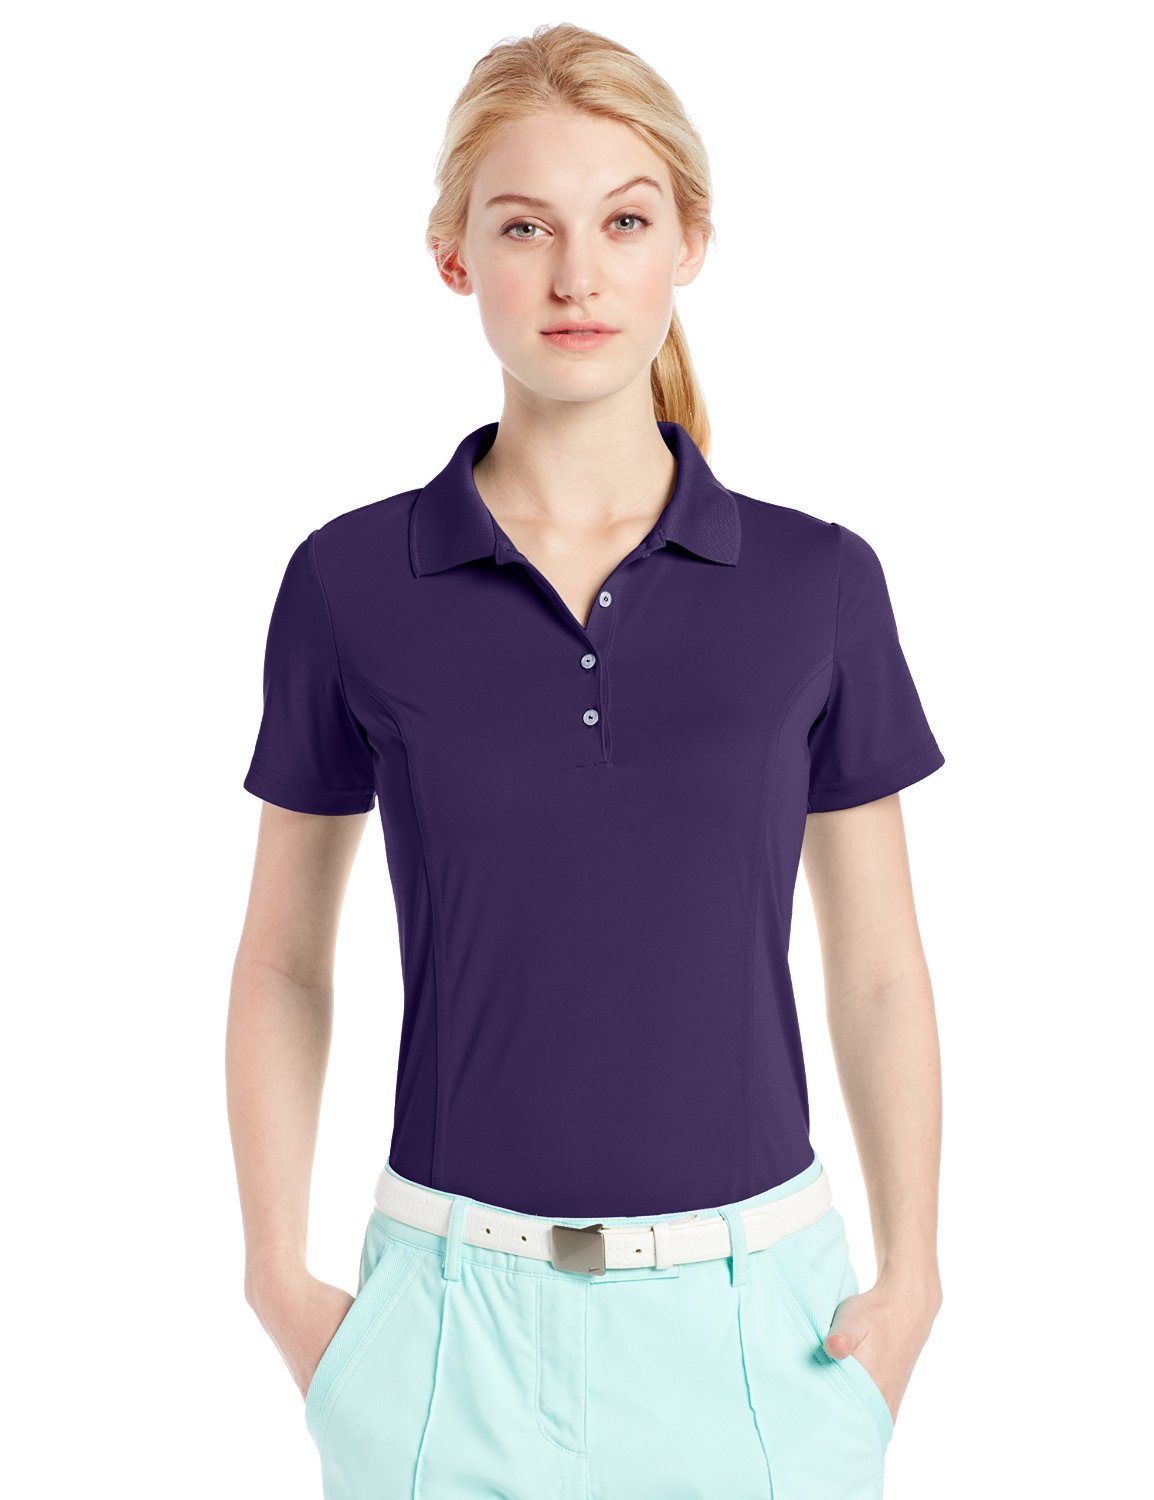 Adidas Womens Puremotion Solid Jersey Golf Shirts